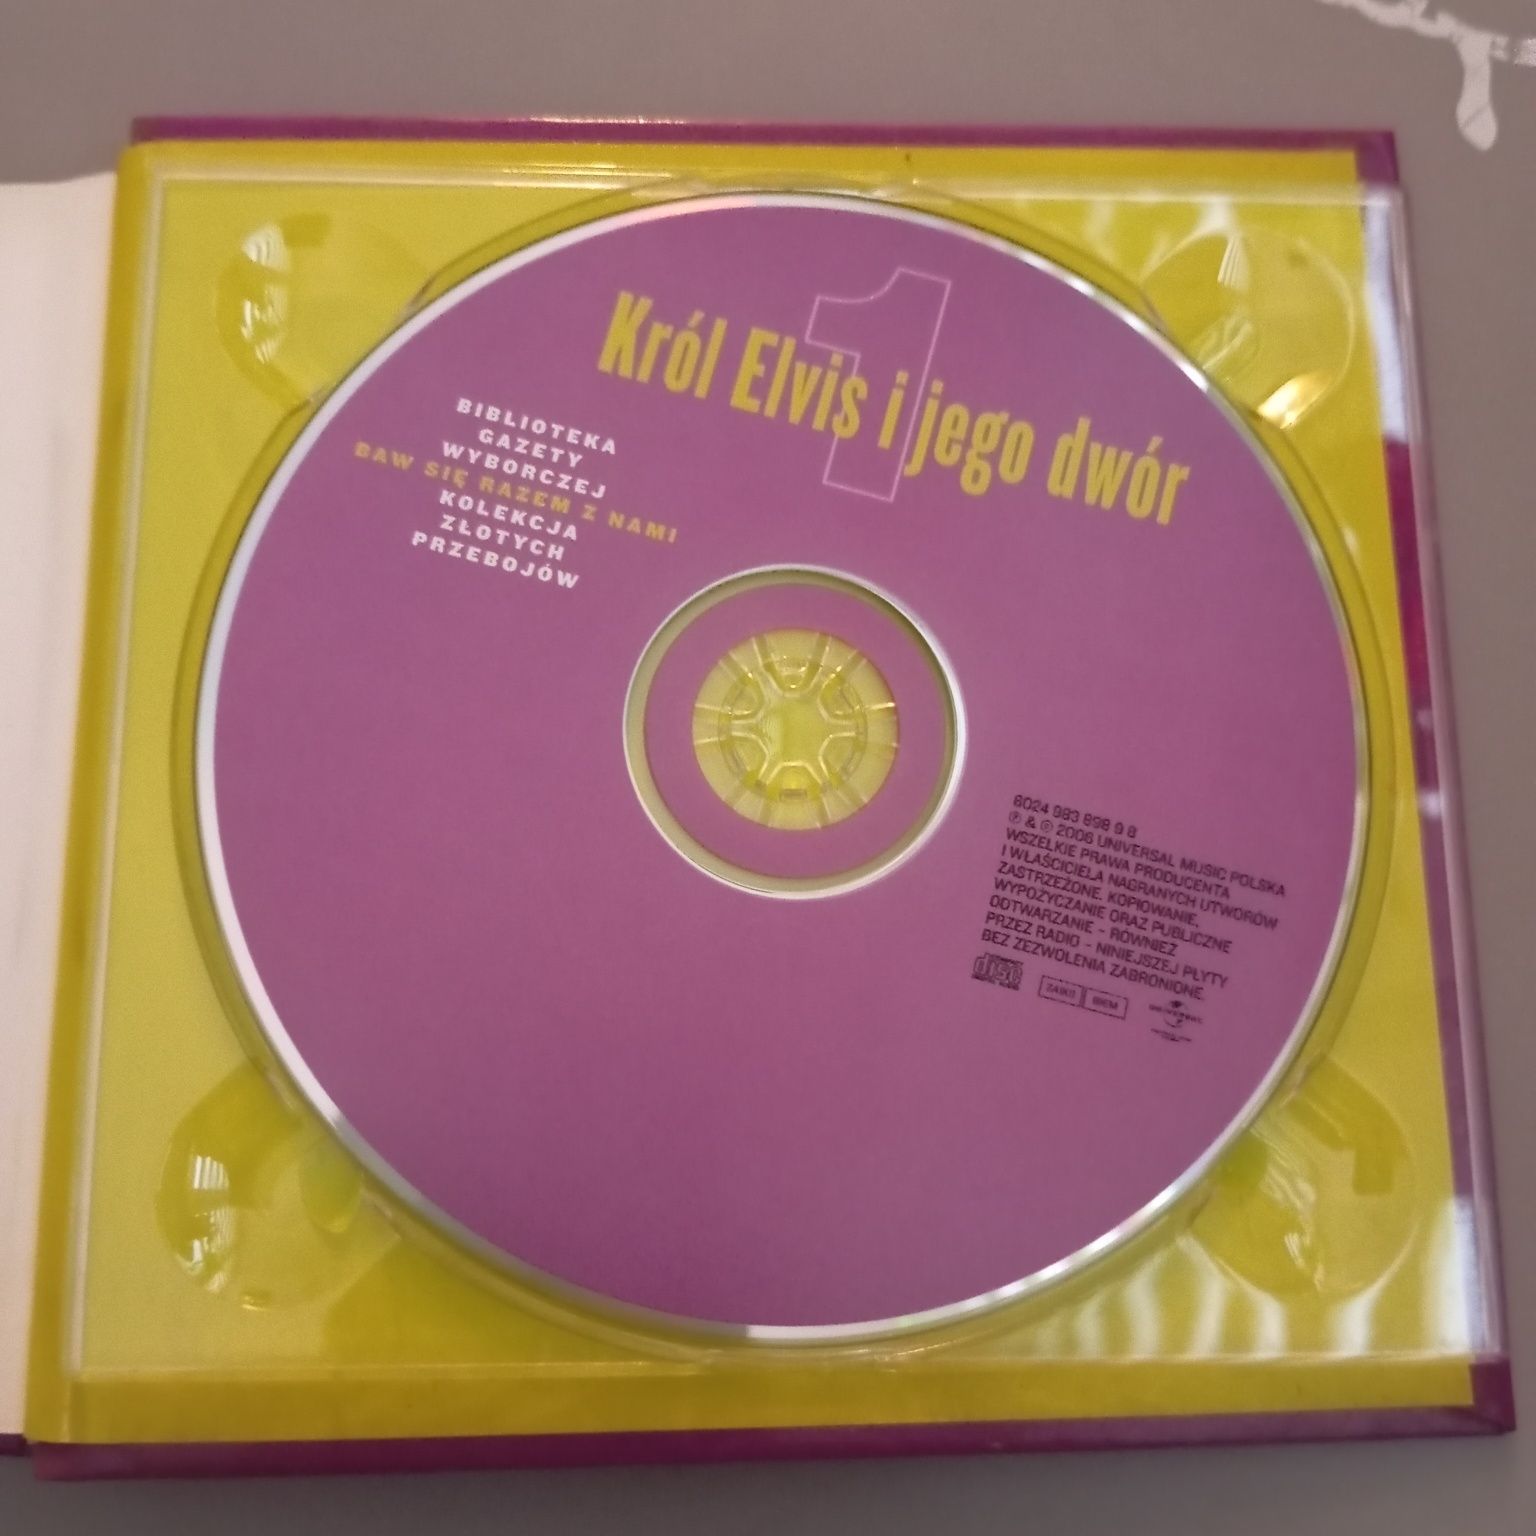 Król Elvis i jego dwór, CD, stan bdb